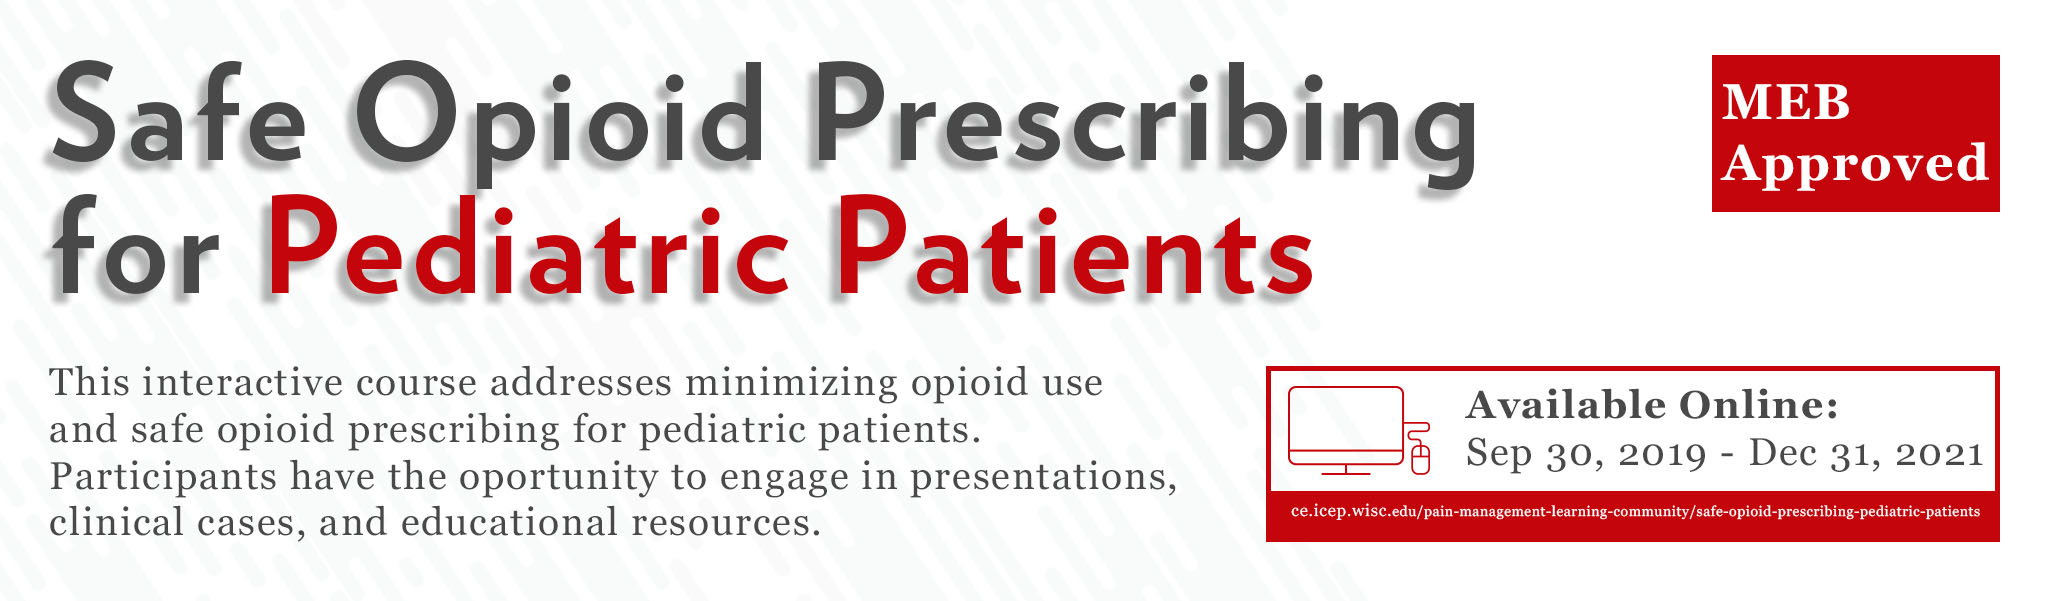 Safe Opioid Prescribing for Pediatric Patients Online Course MEB Credit